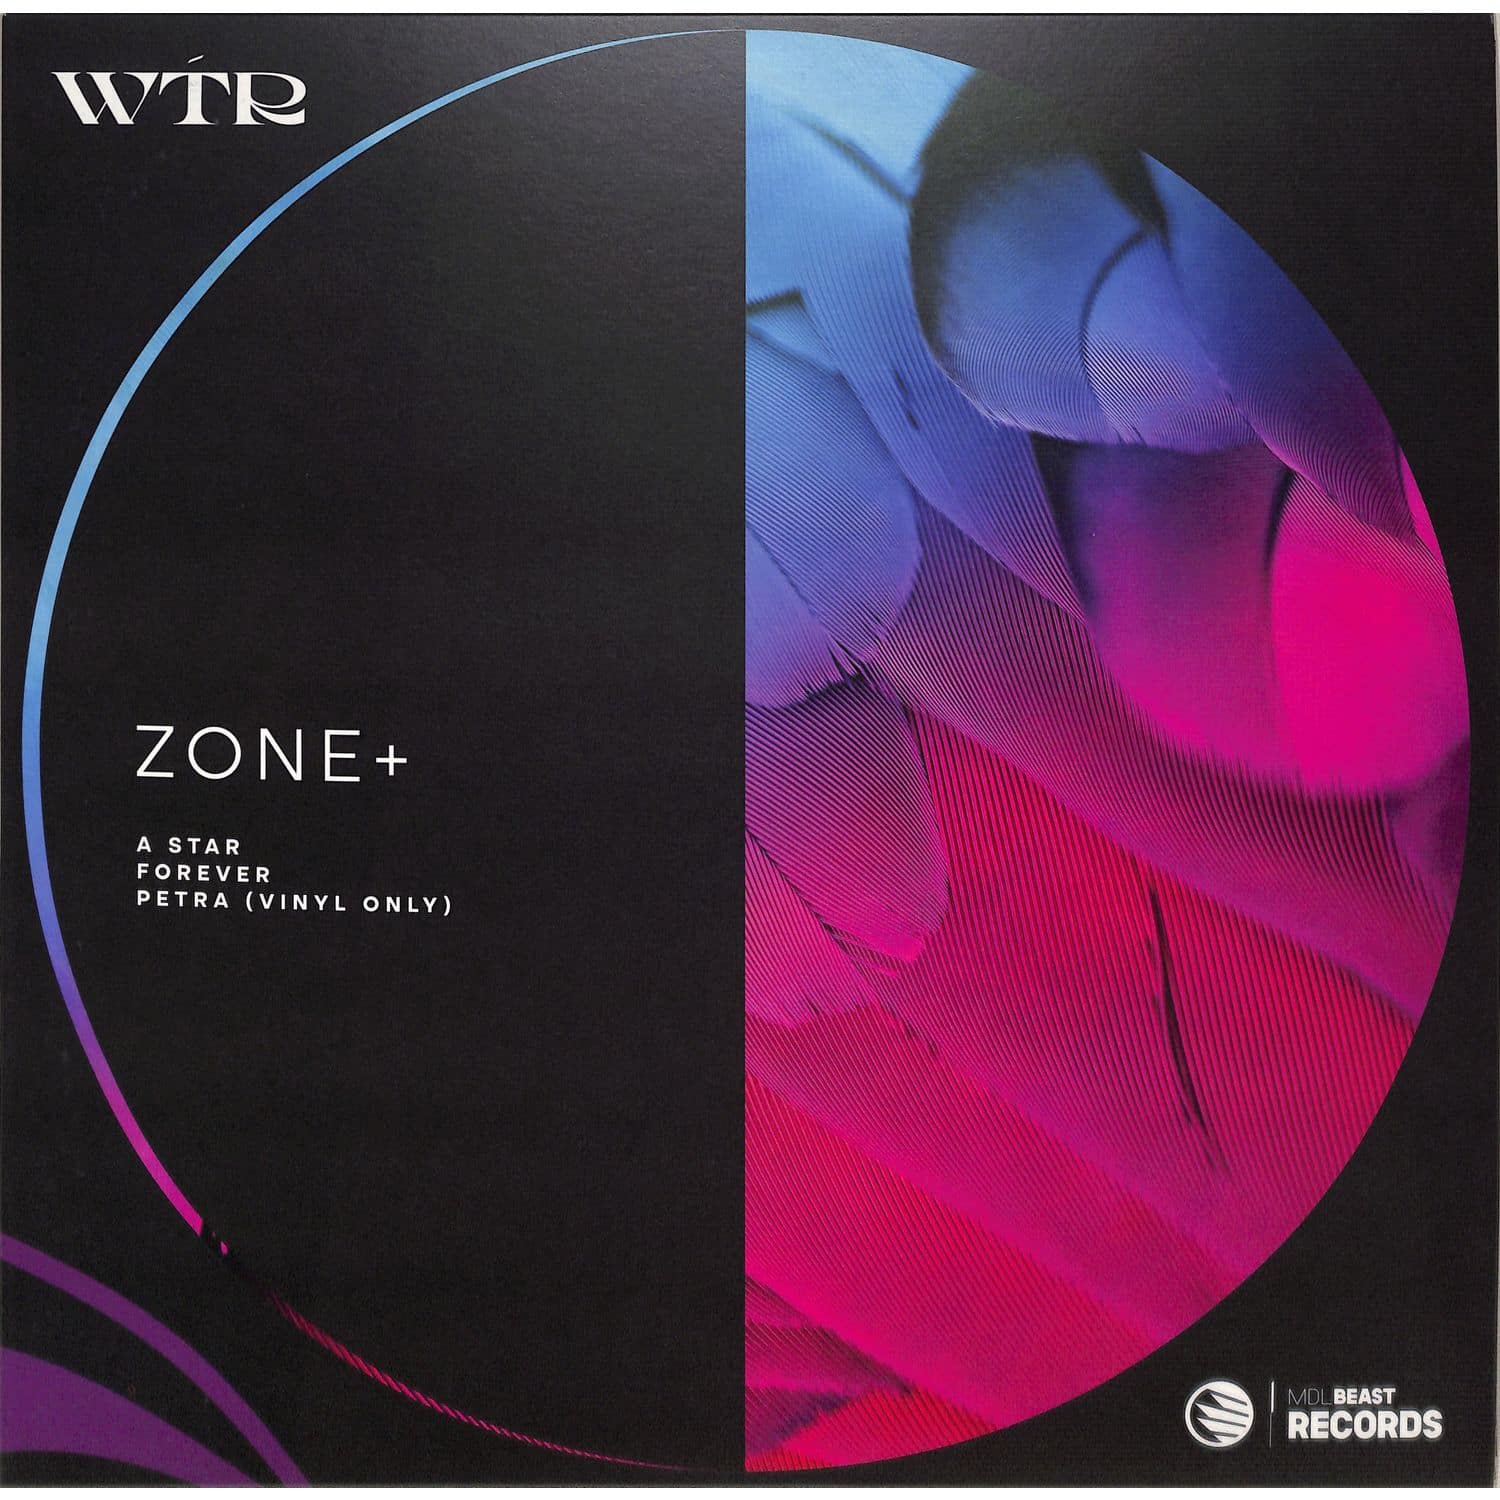 Zone+ - A STAR